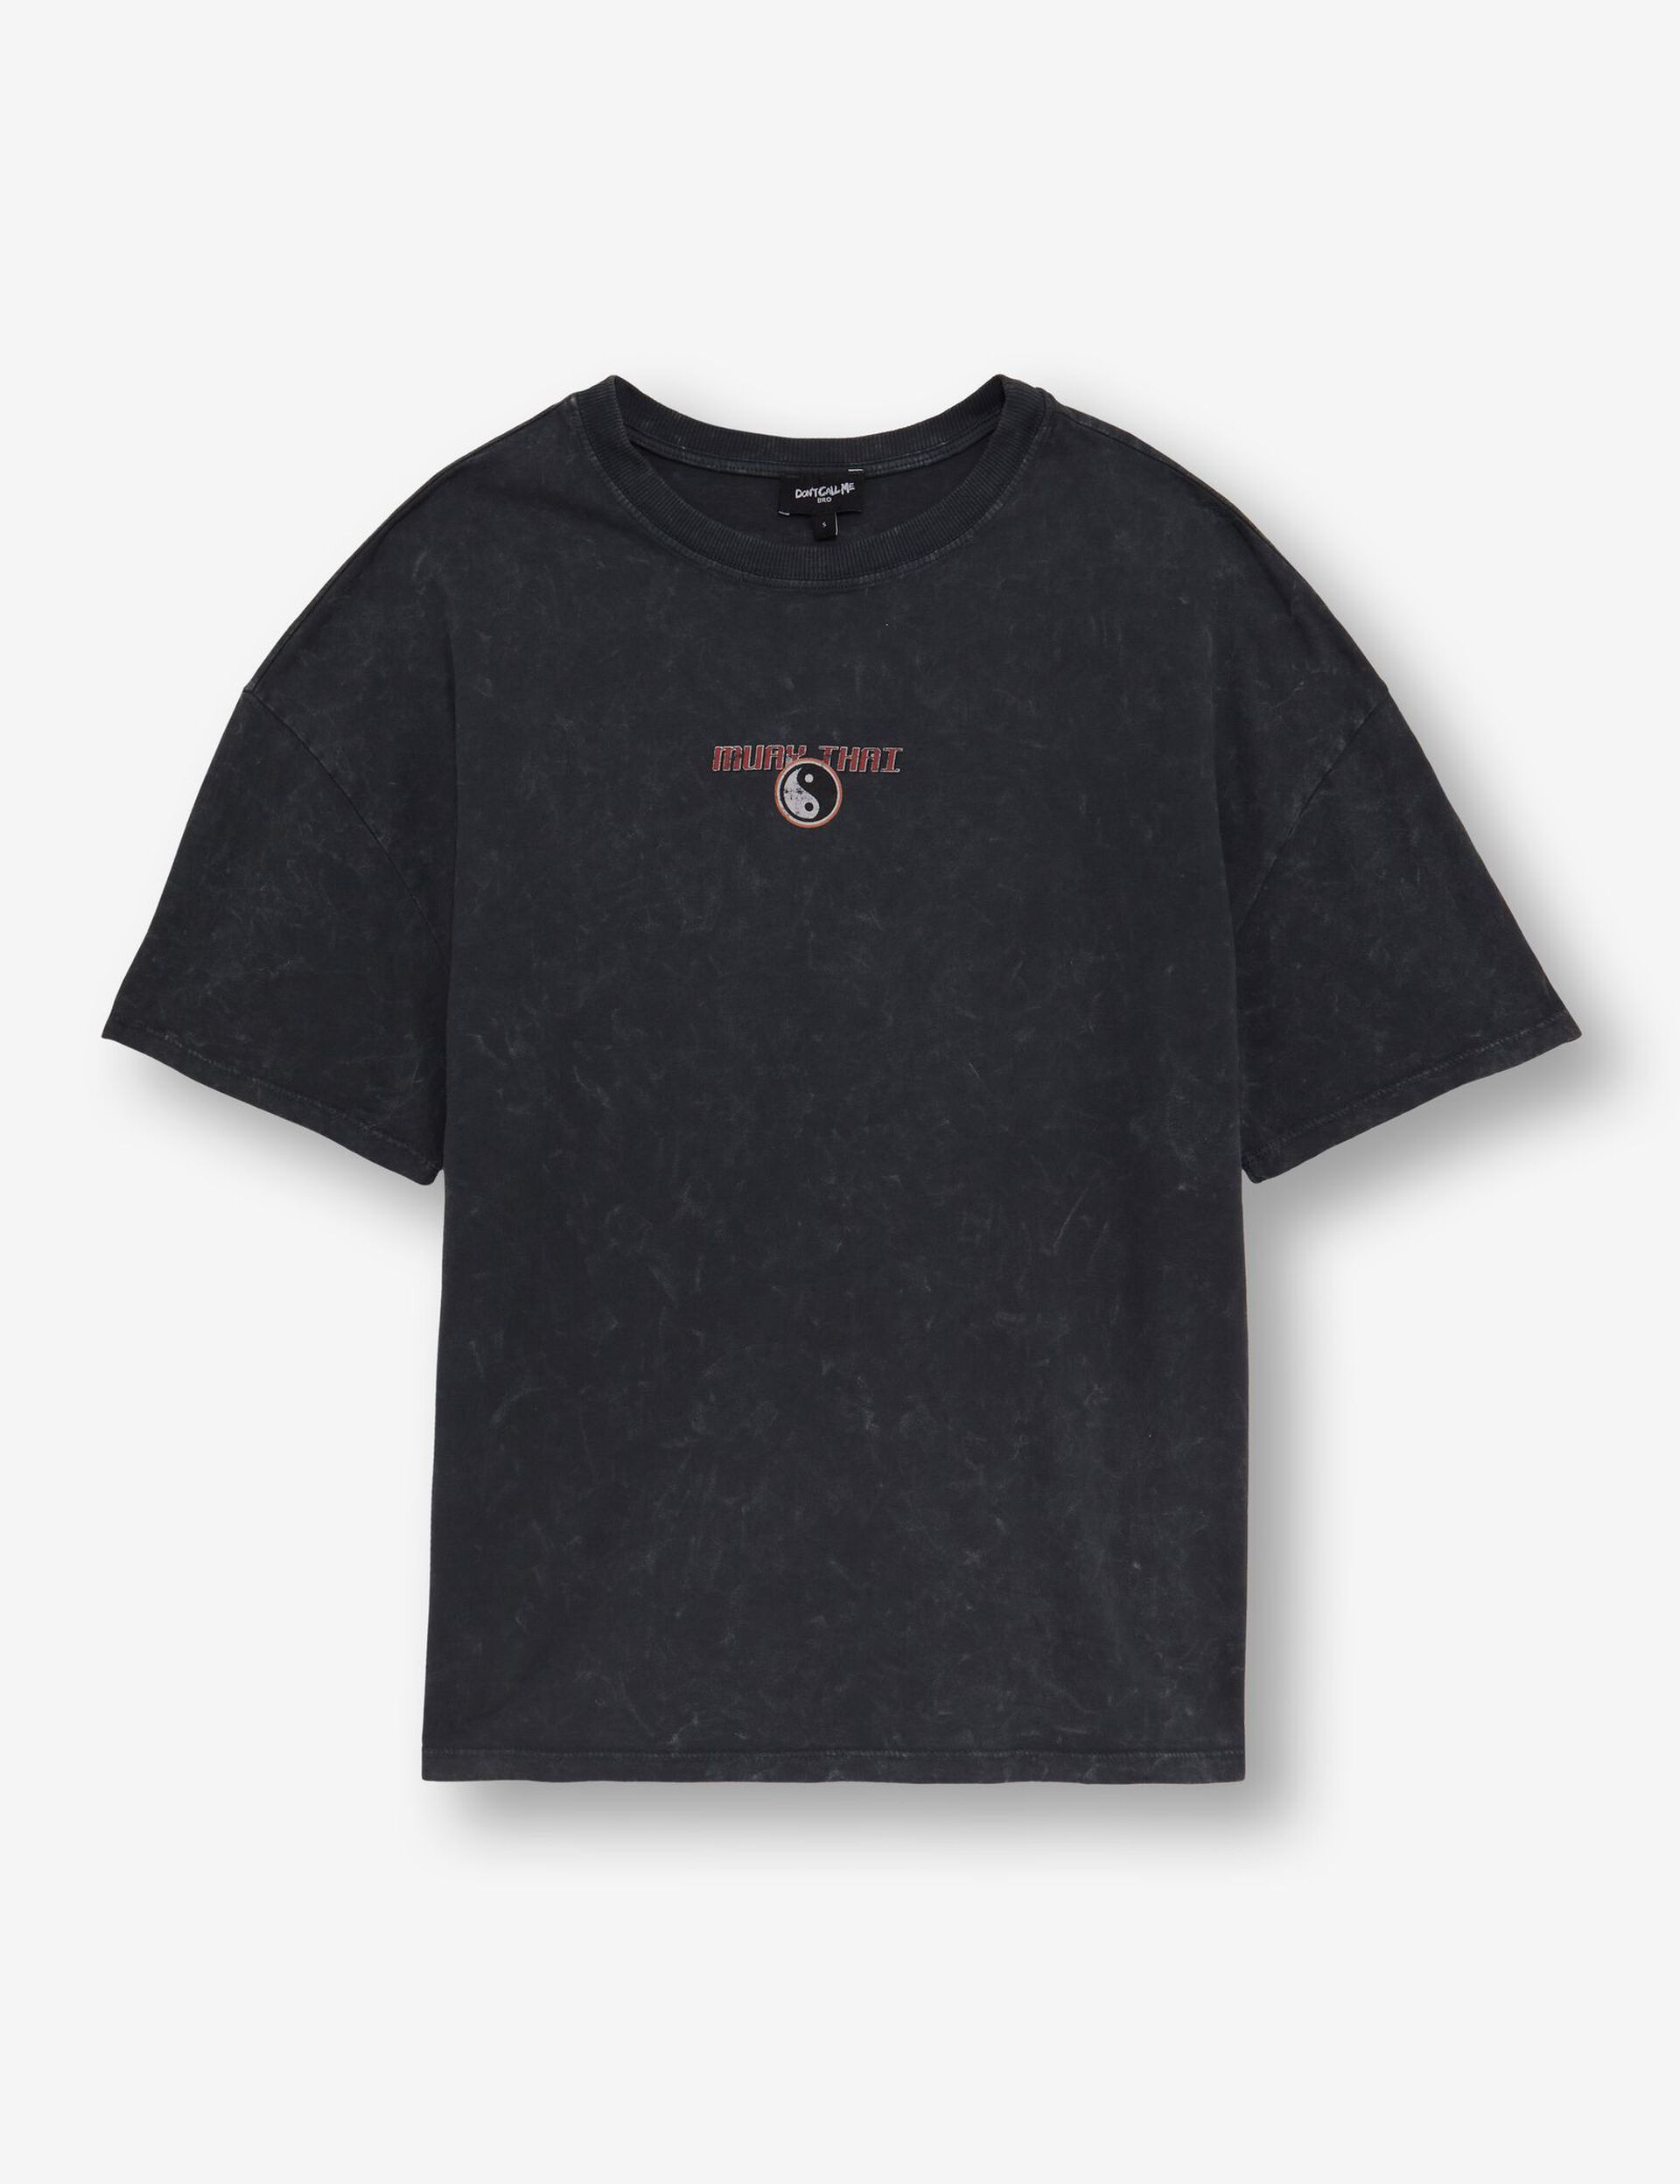 Tee-shirt yin yang  noir délavé